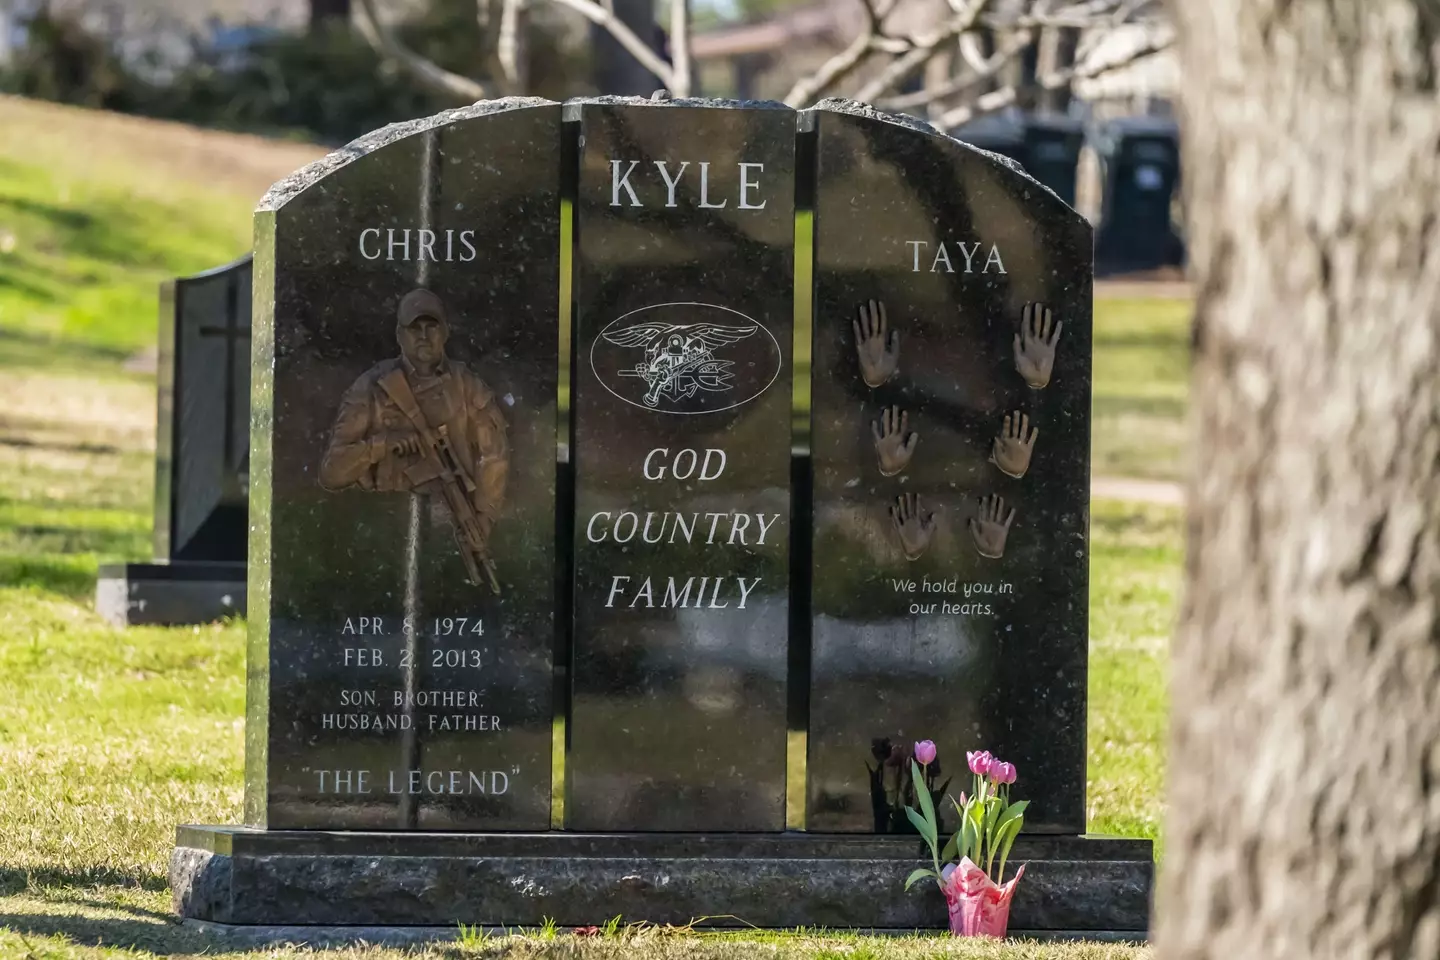 Chris Kyle was shot dead in 2013.